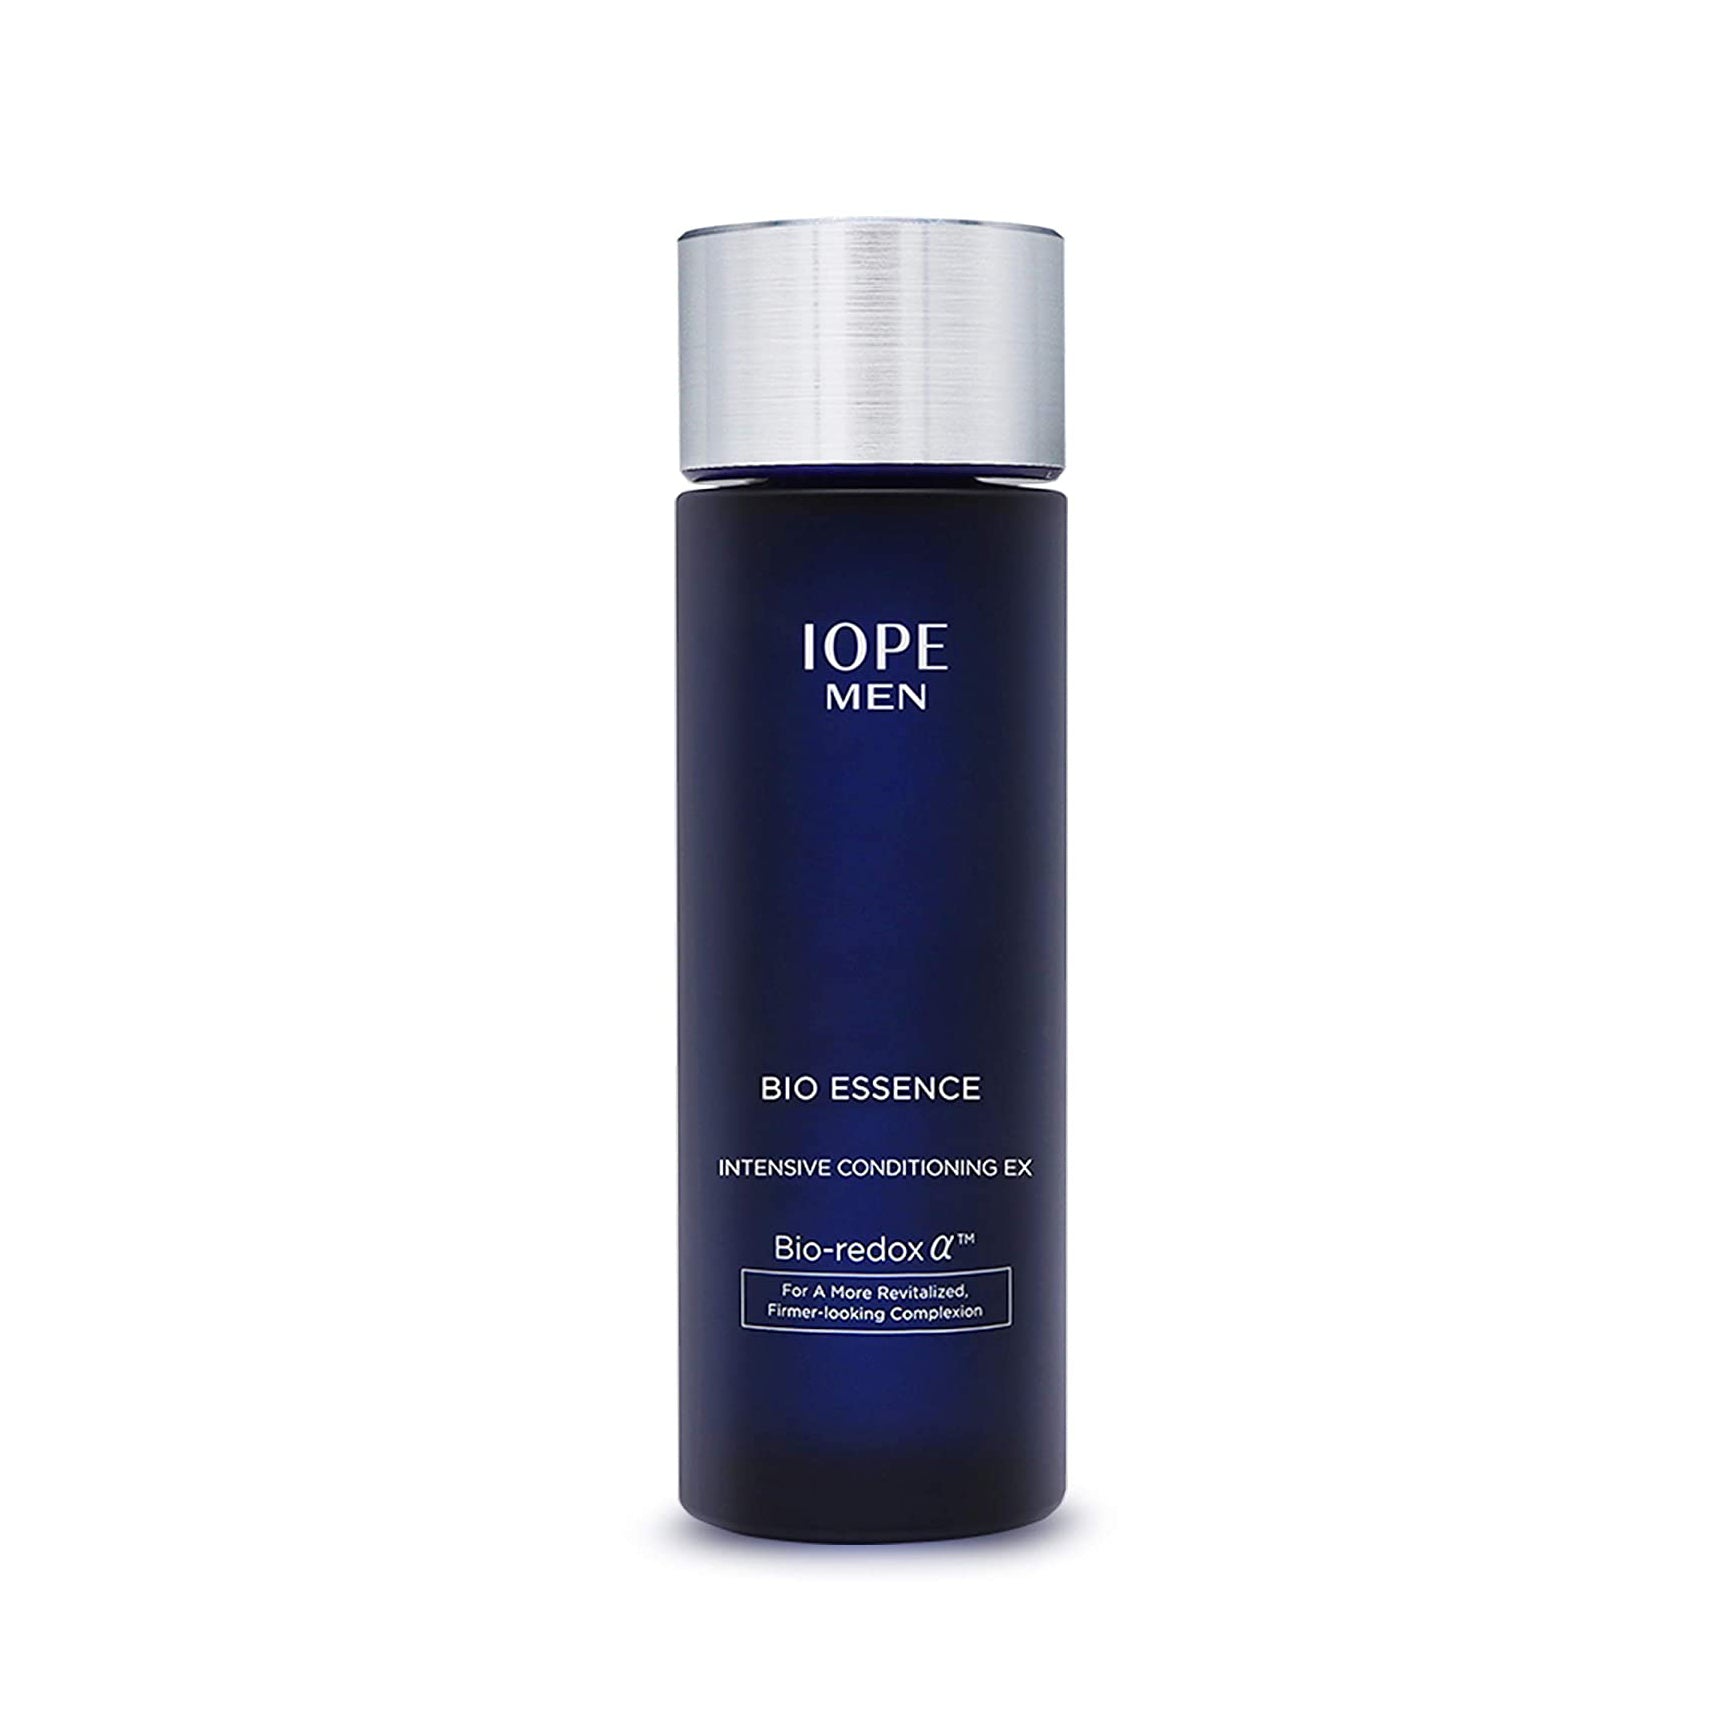 IOPE Men Bio Essence Intensive Conditioning EX - Goryeo Cosmetics worldwide shop 